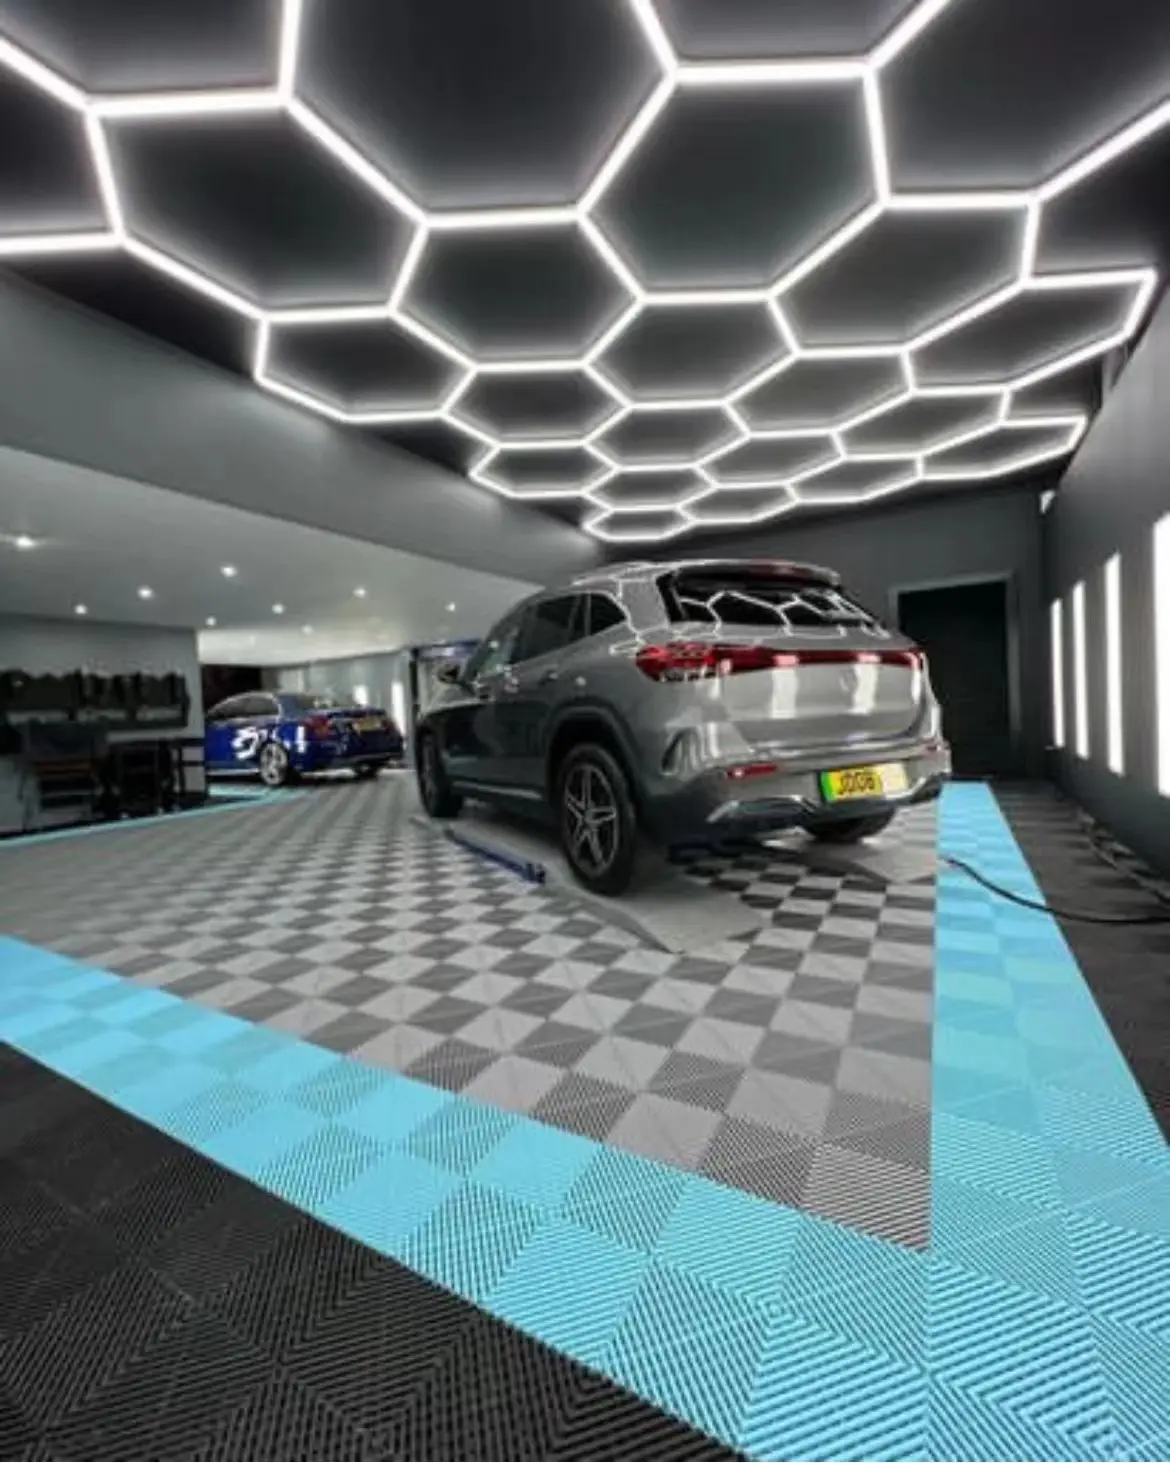 First Class Quality detailing garage flooring tiles vented car click tiles